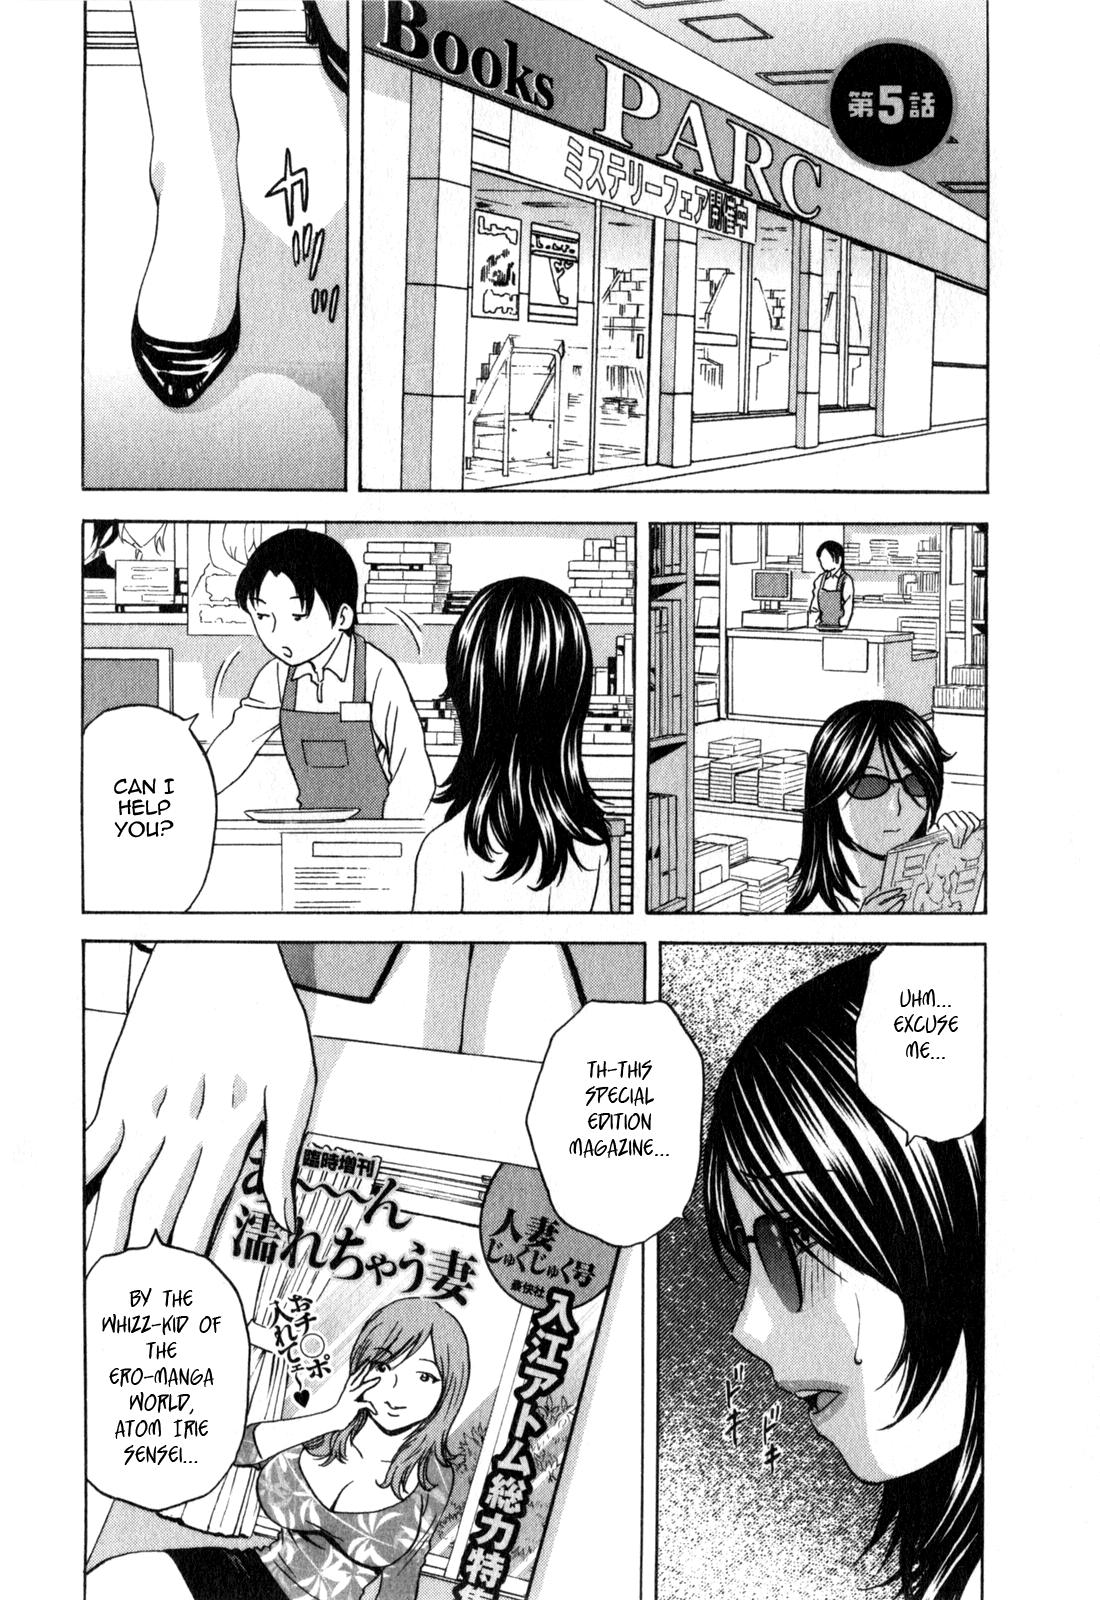 [Hidemaru] Life with Married Women Just Like a Manga 3 - Ch. 1-6 [English] {Tadanohito} 86